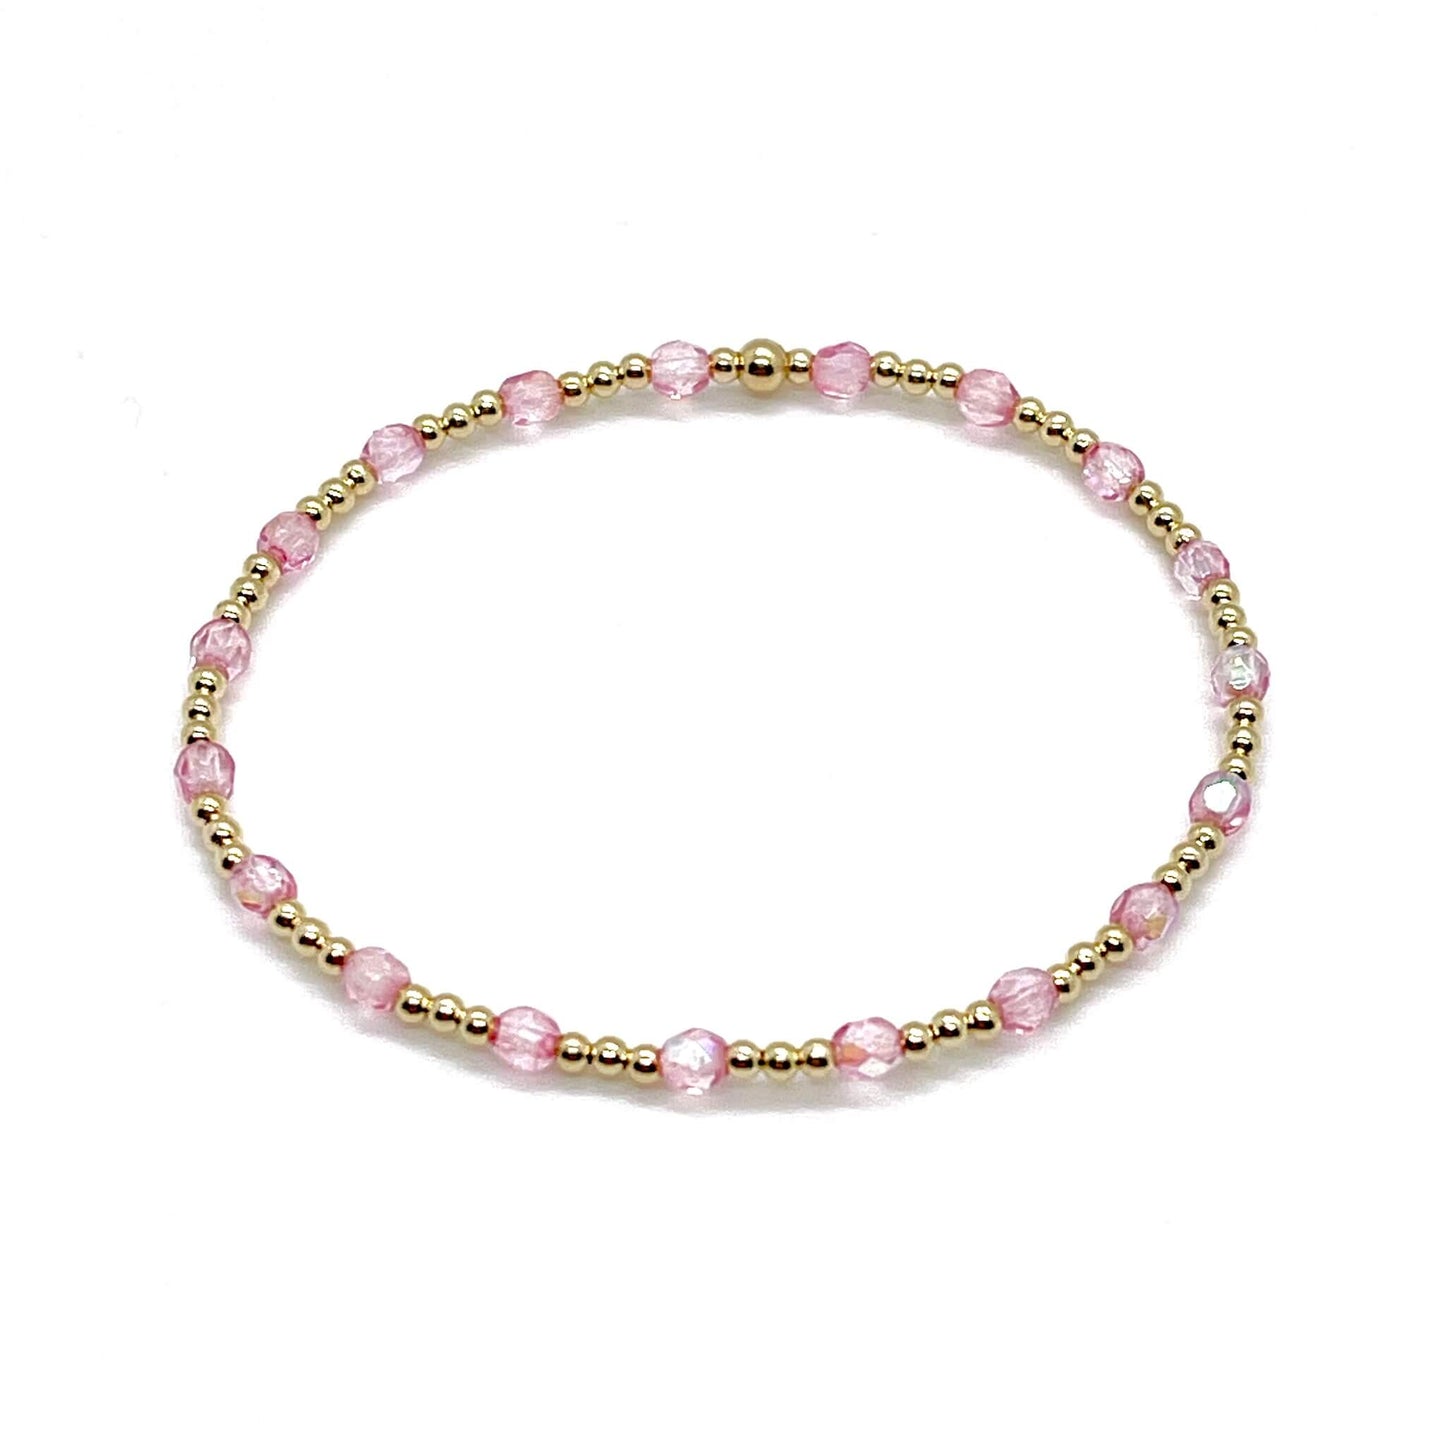 Pink crystal bracelet wtih gold beads. Delicate, handmade womens stretch bracelet.